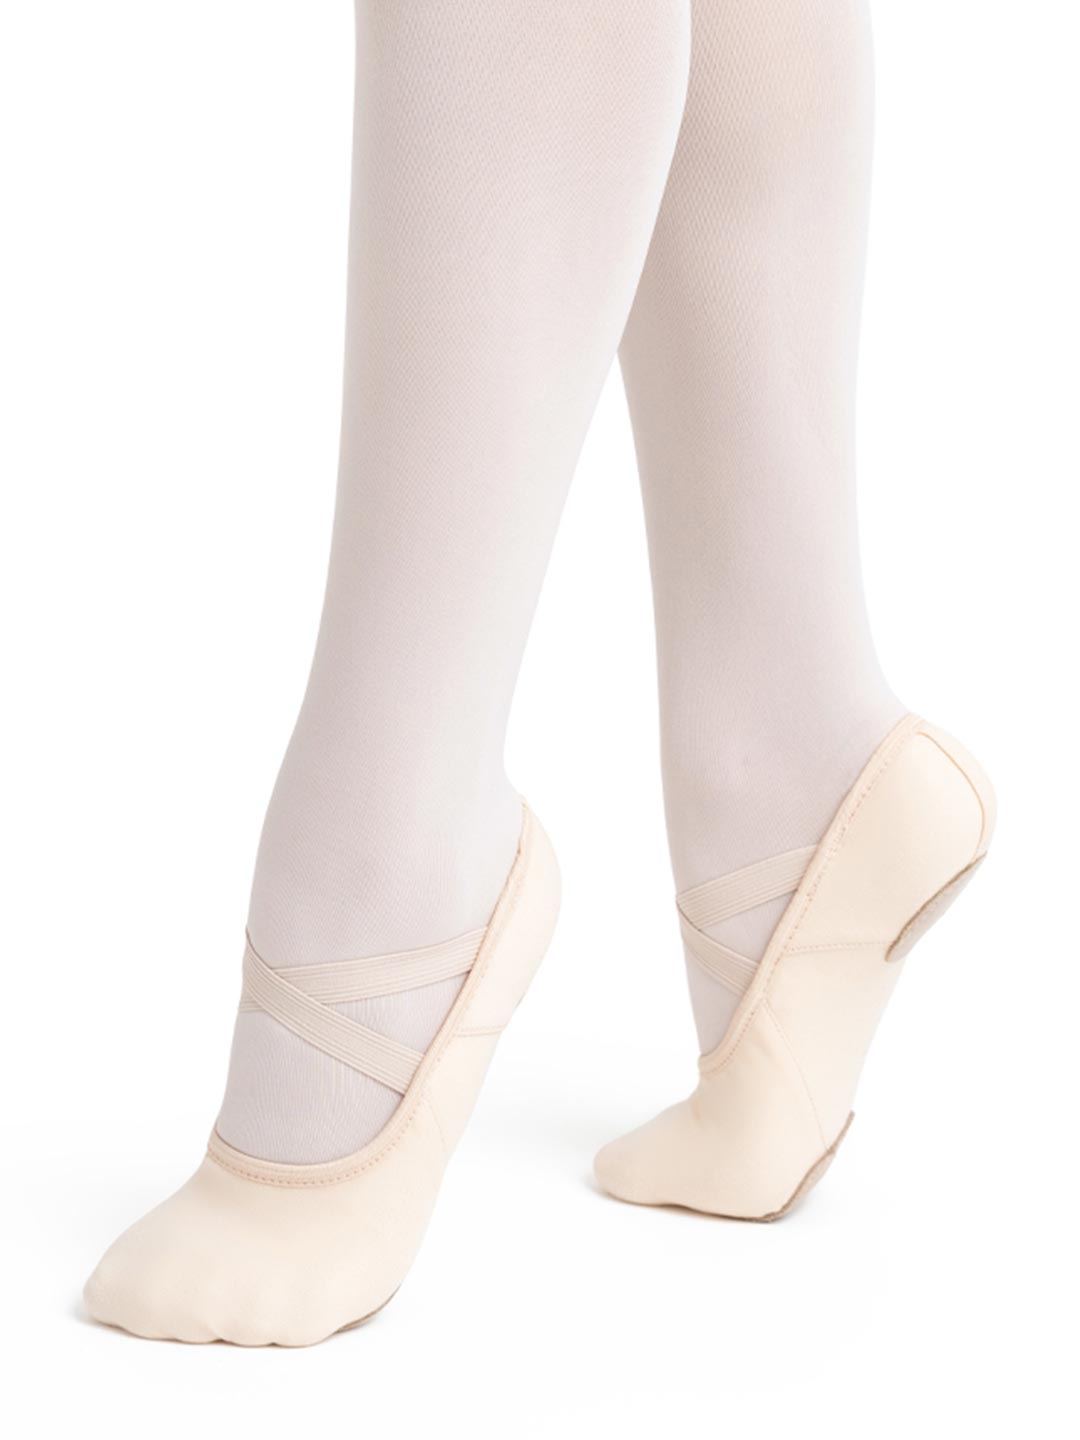 Hanami Canvas Ballet Slipper Adult - Pink and Skin-tones (Capezio 2037)